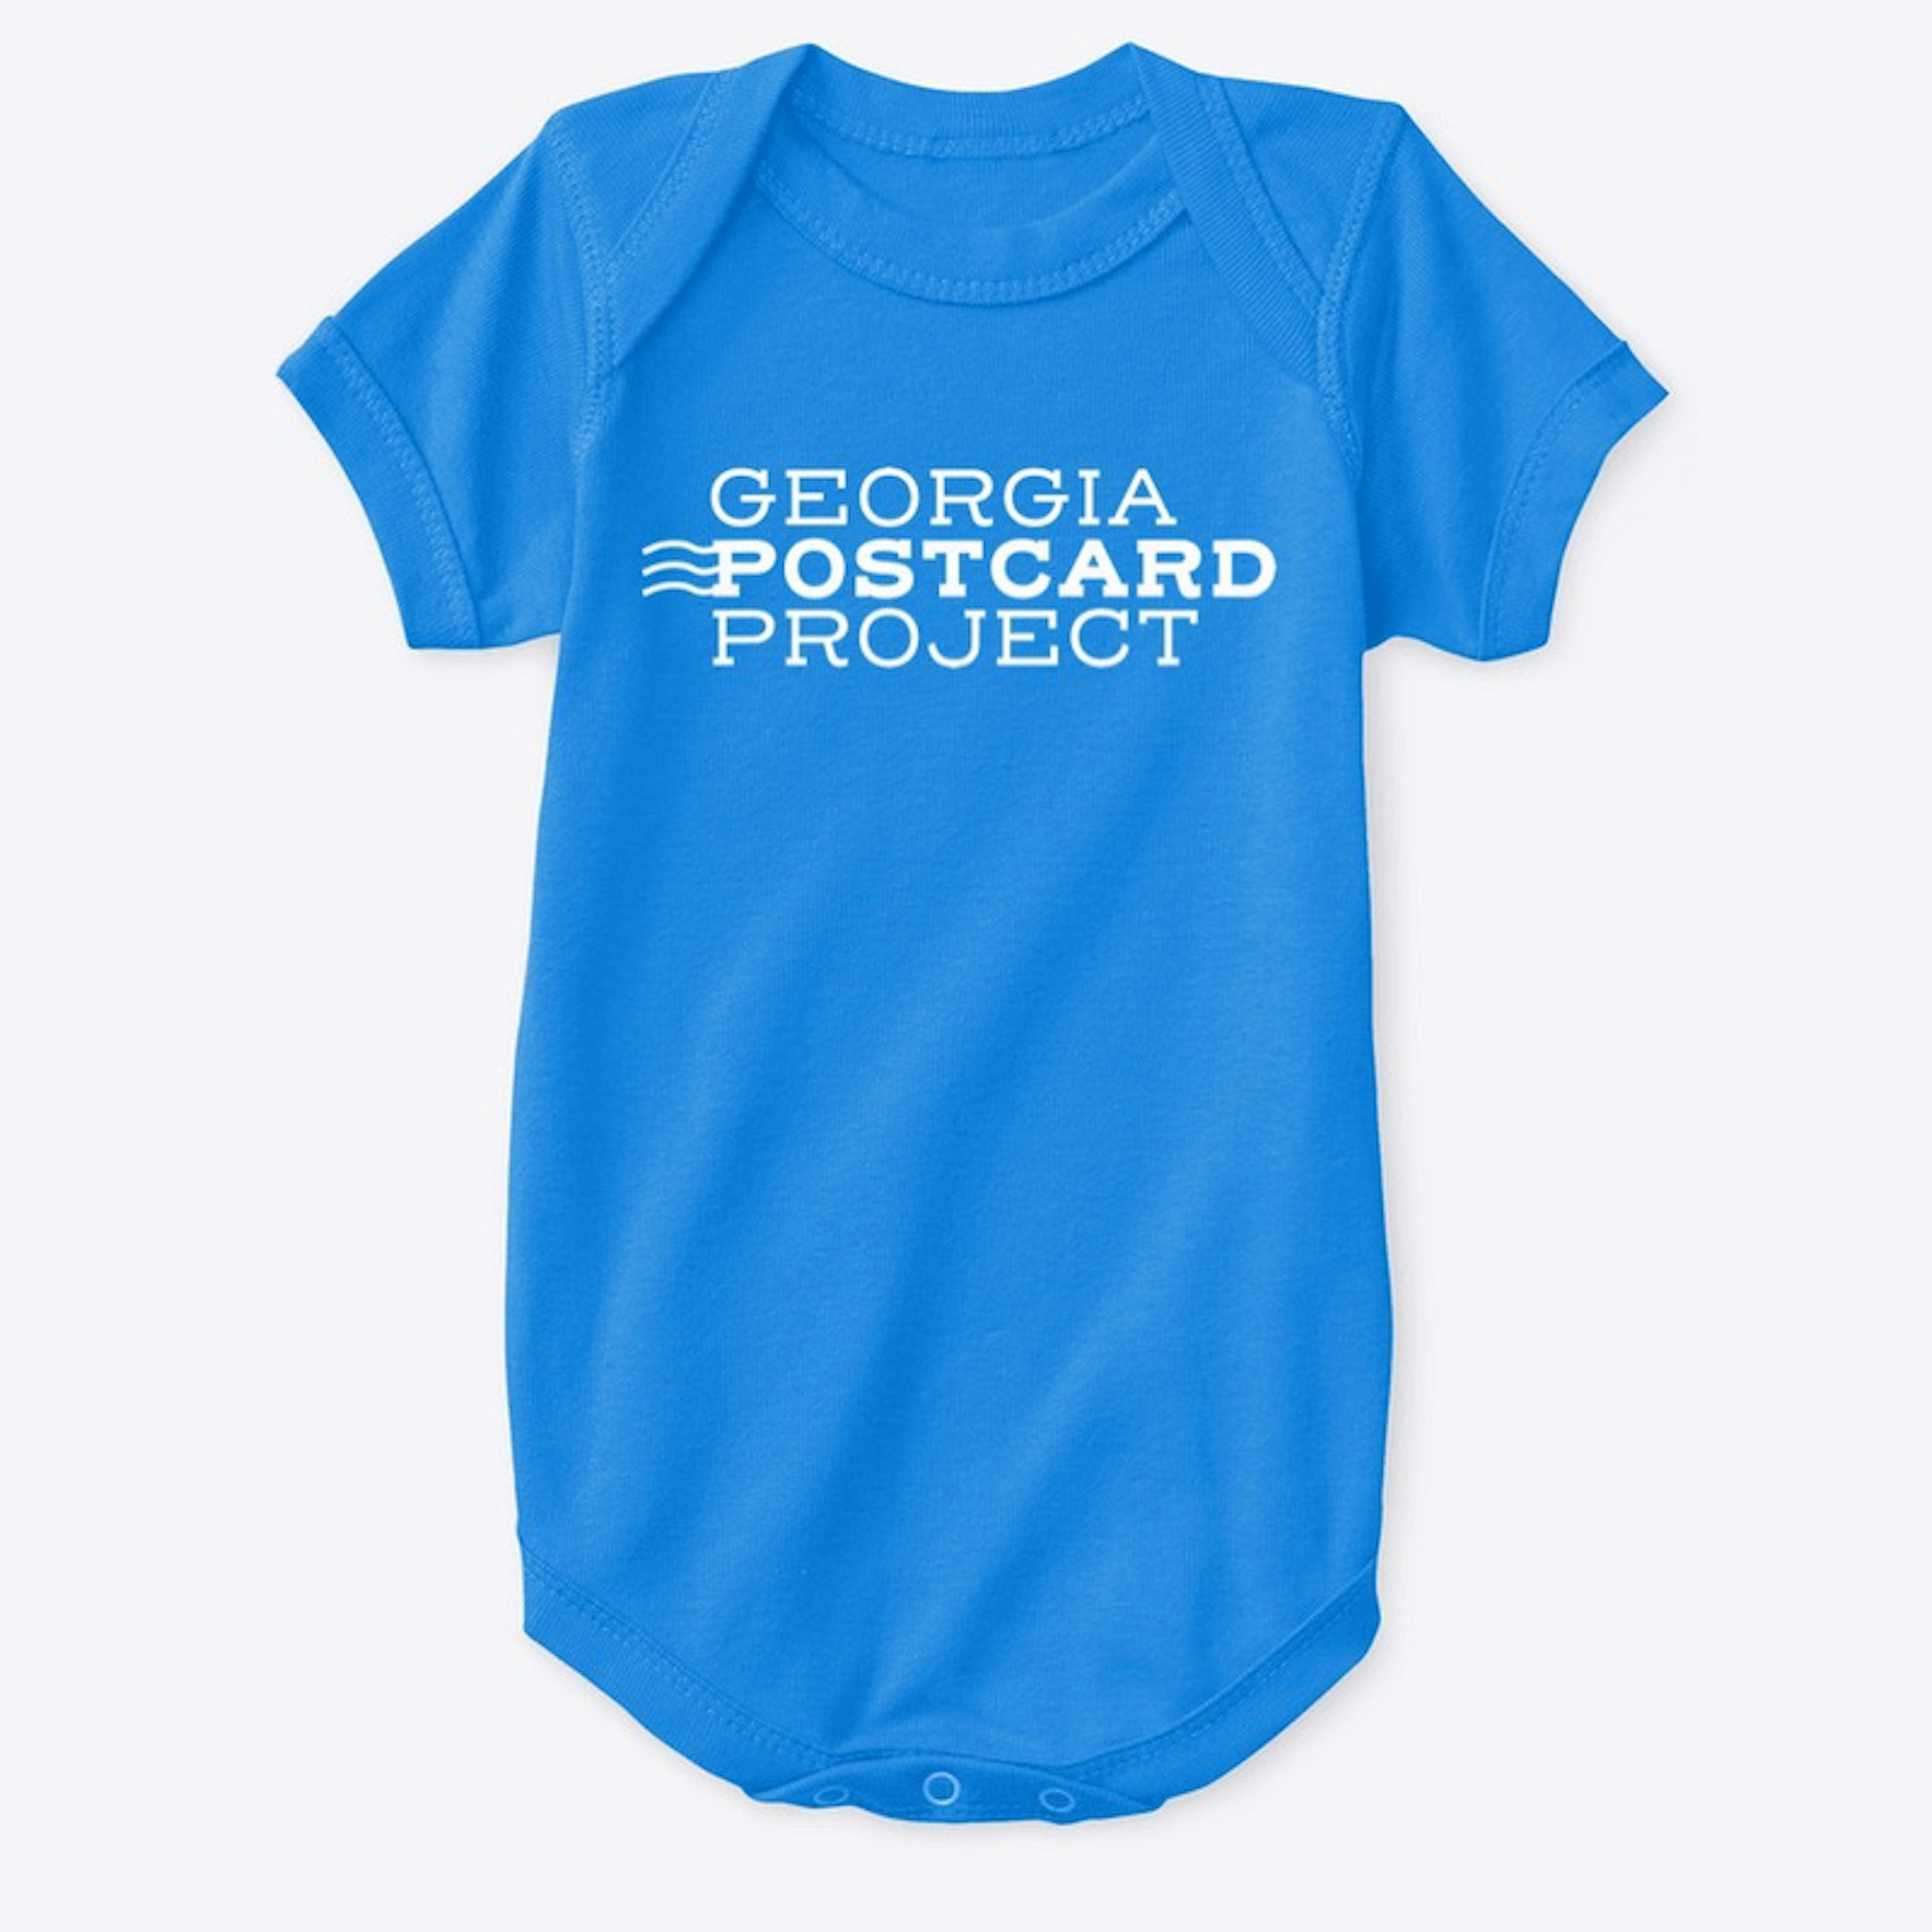 Georgia Postcard Project - Kid's Tee